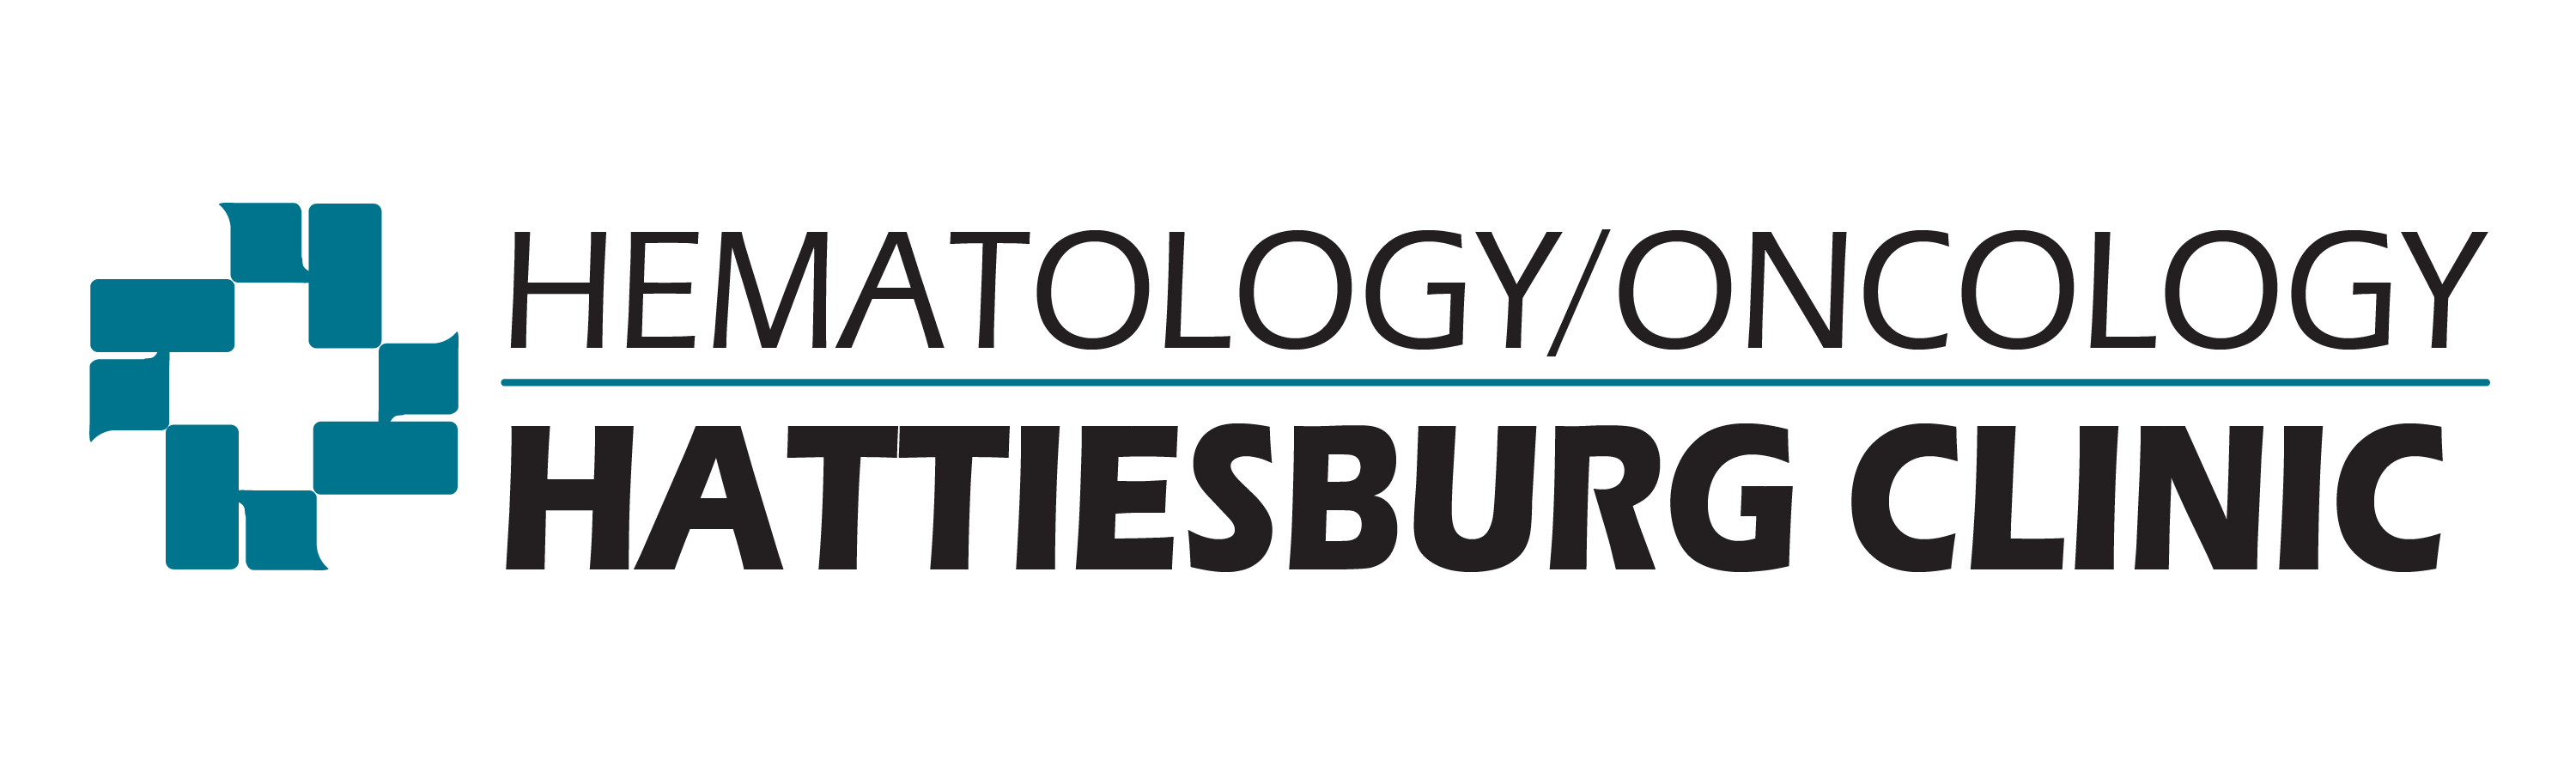 Hematology/Oncology logo